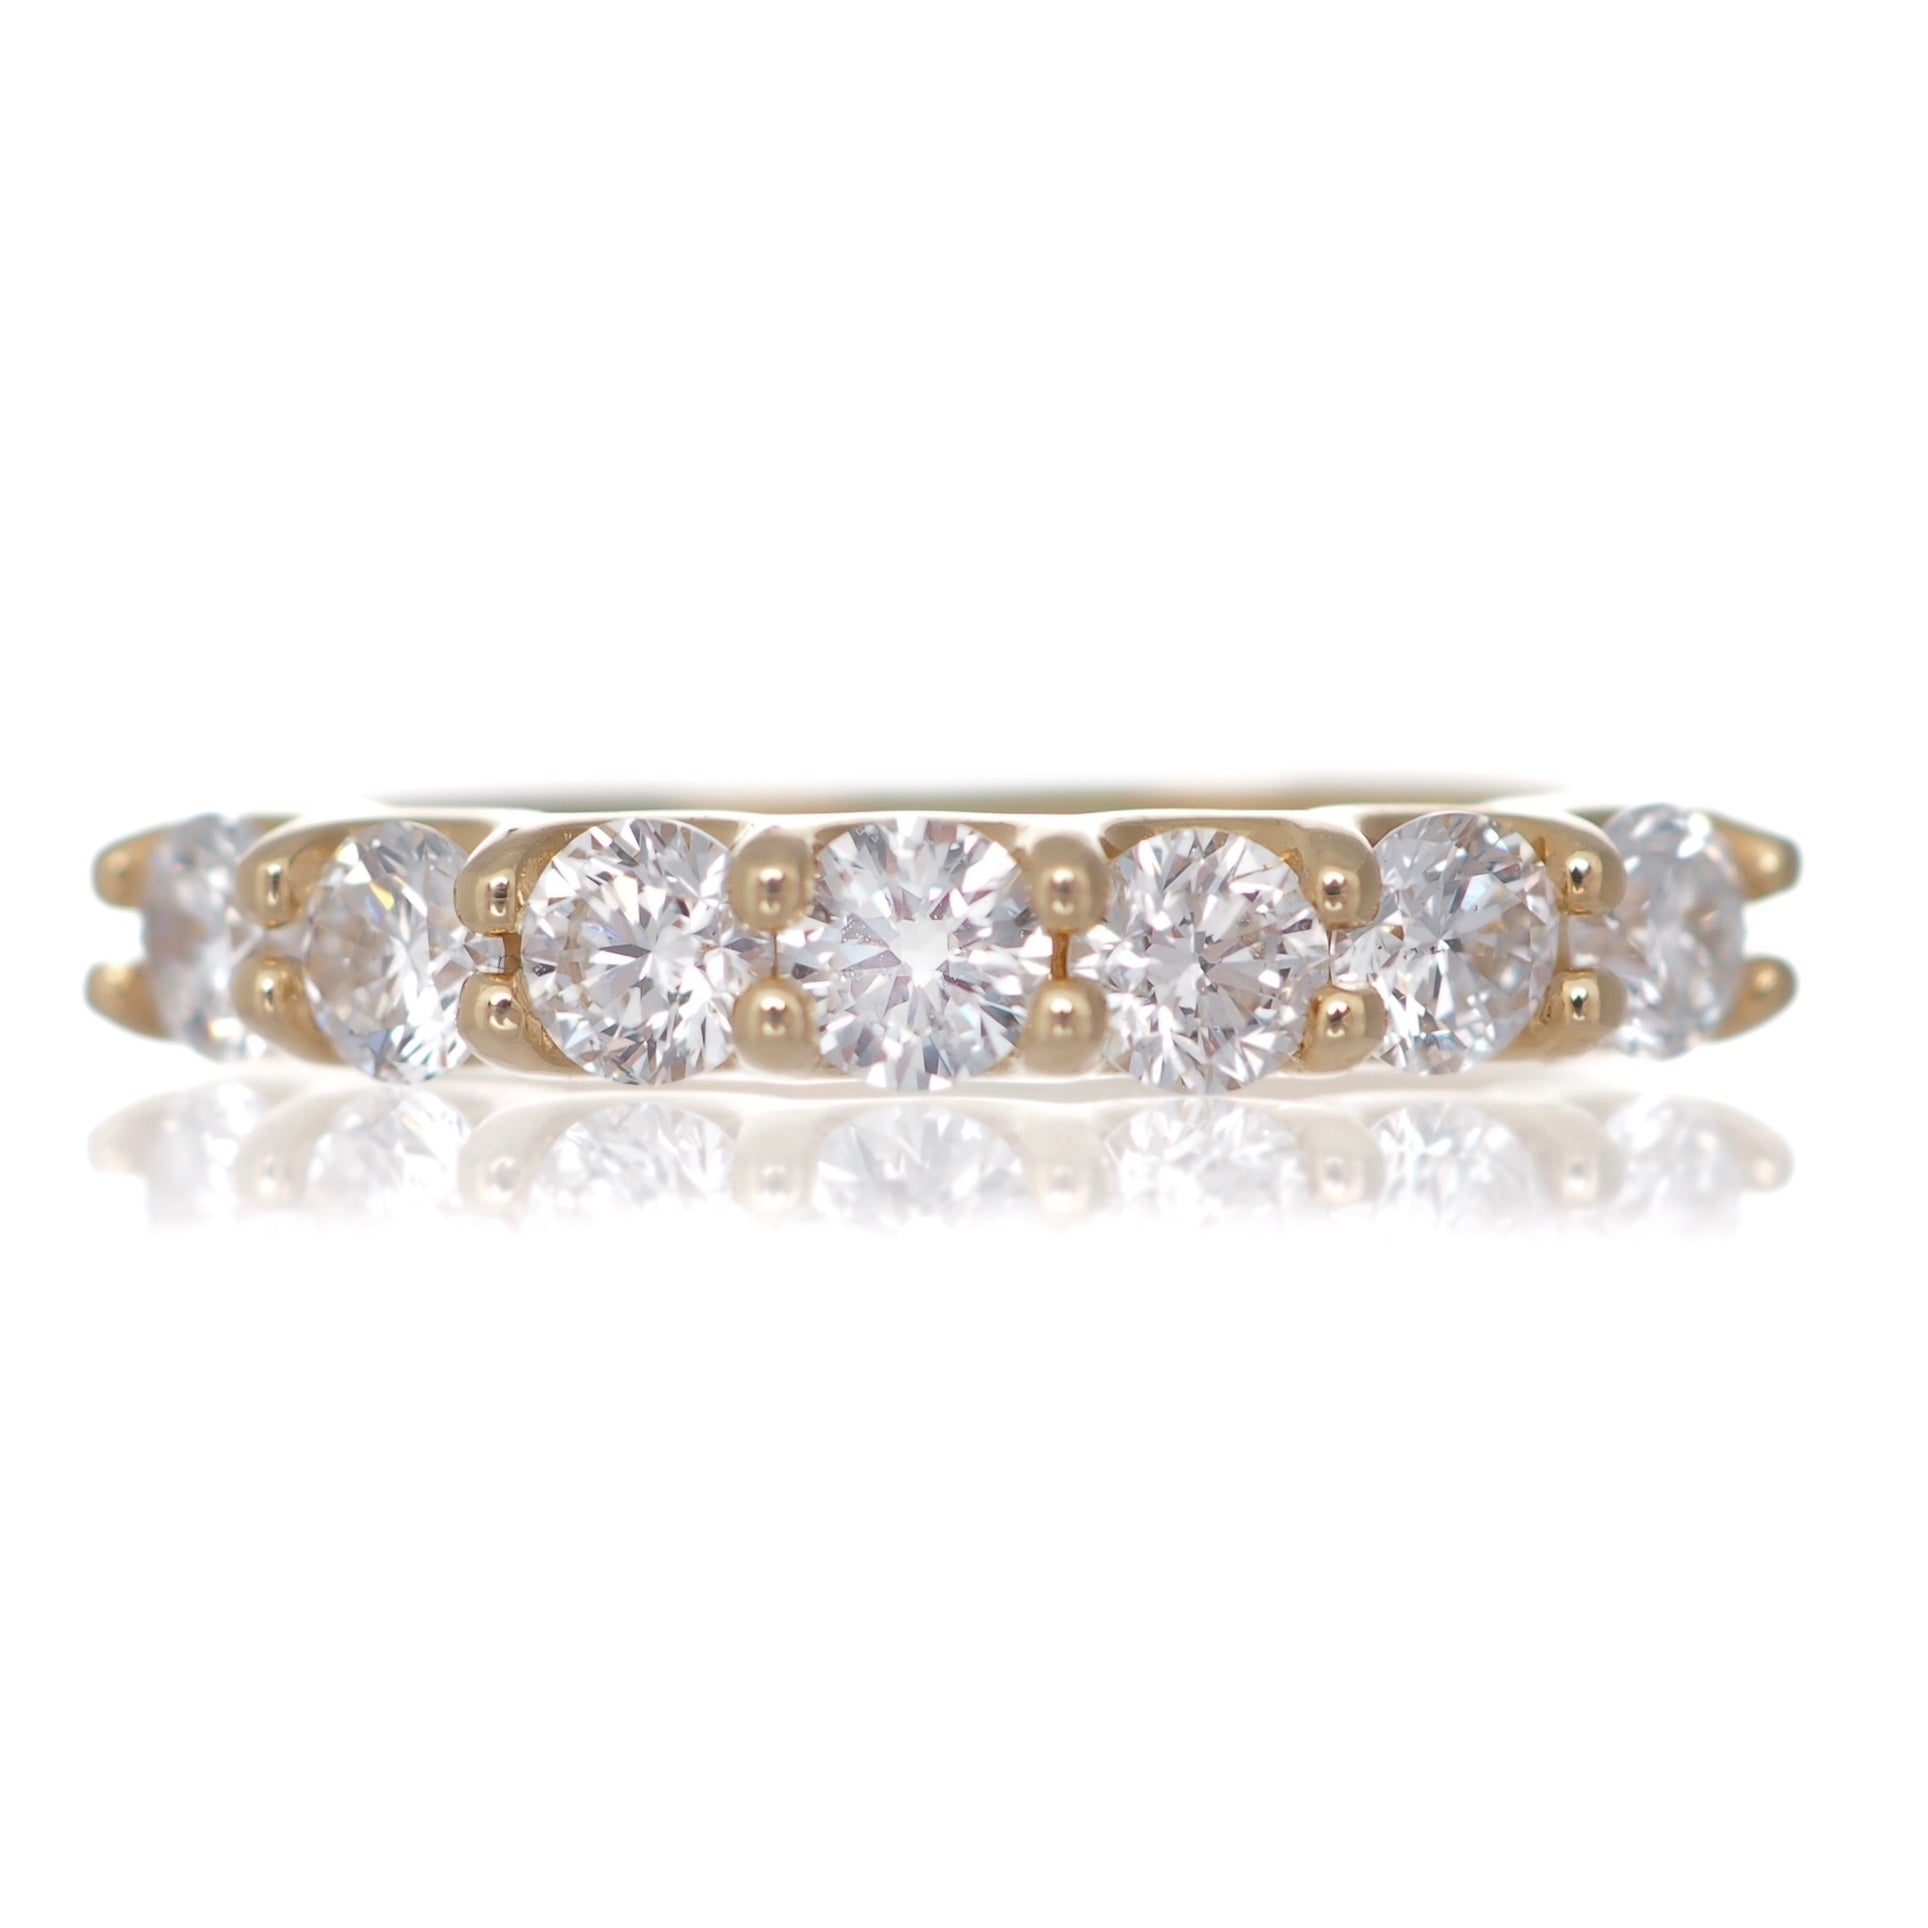 Round brilliant diamond ring yellow gold wedding band Harrogate jewellers Fogal and barnes 